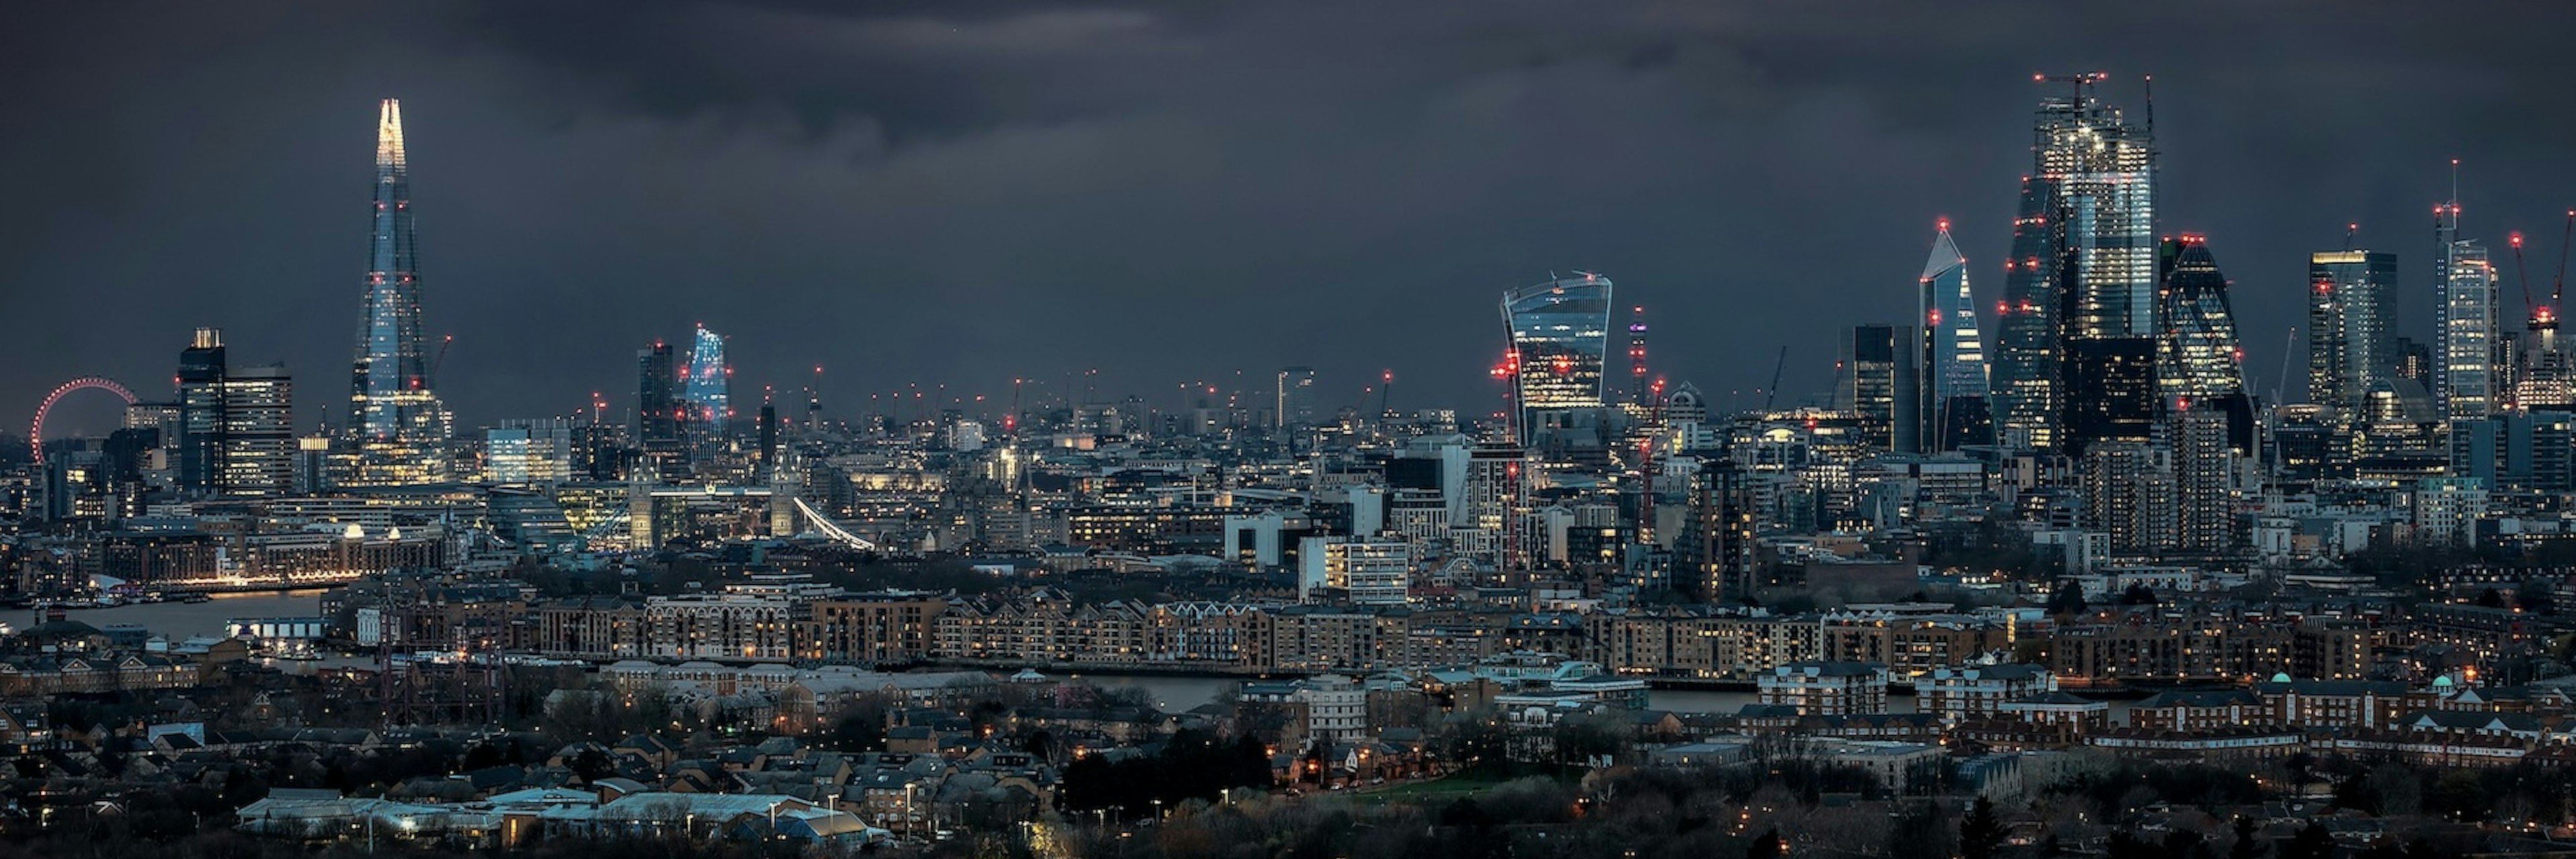 City skyline of London at night under a dark cloudy sky